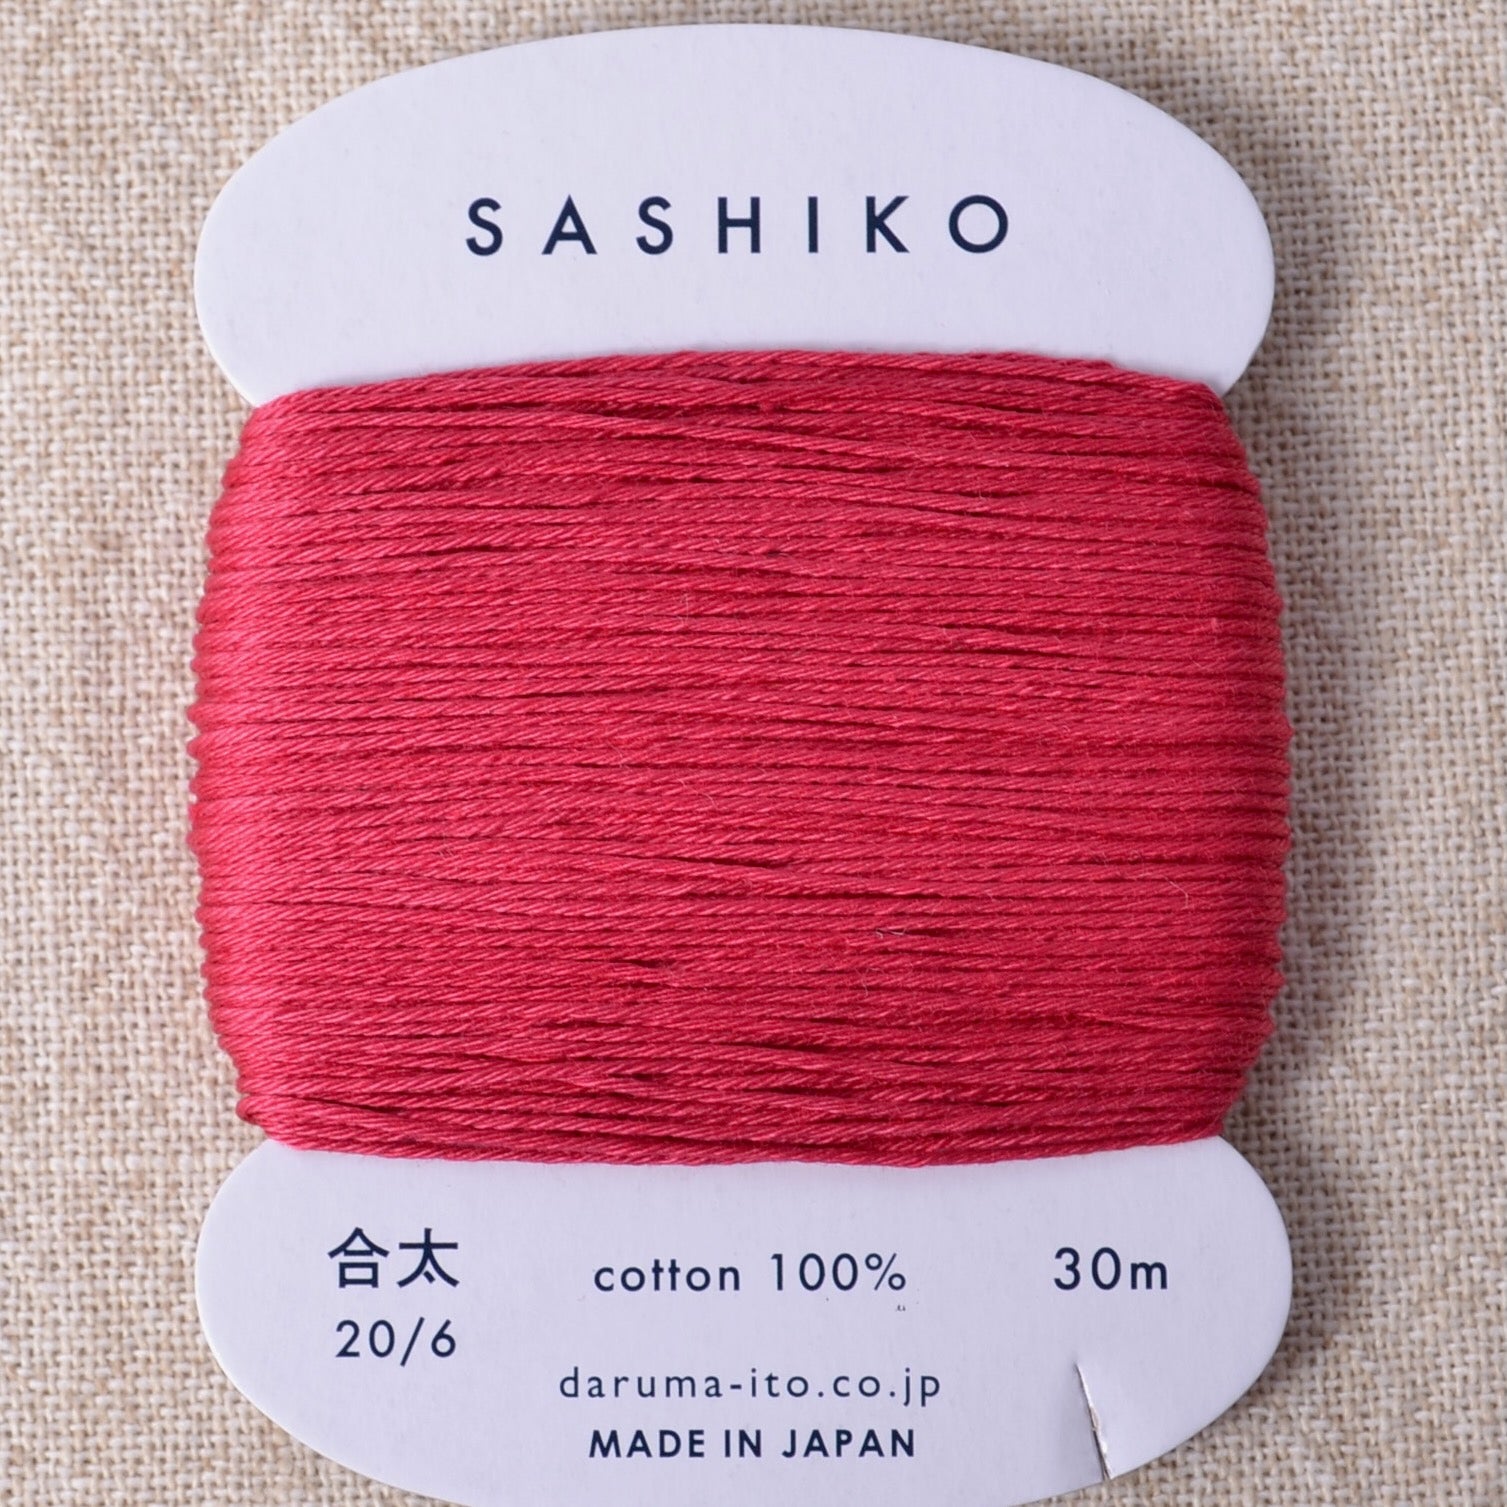 Daruma Sashiko Thread, Bright Red #221